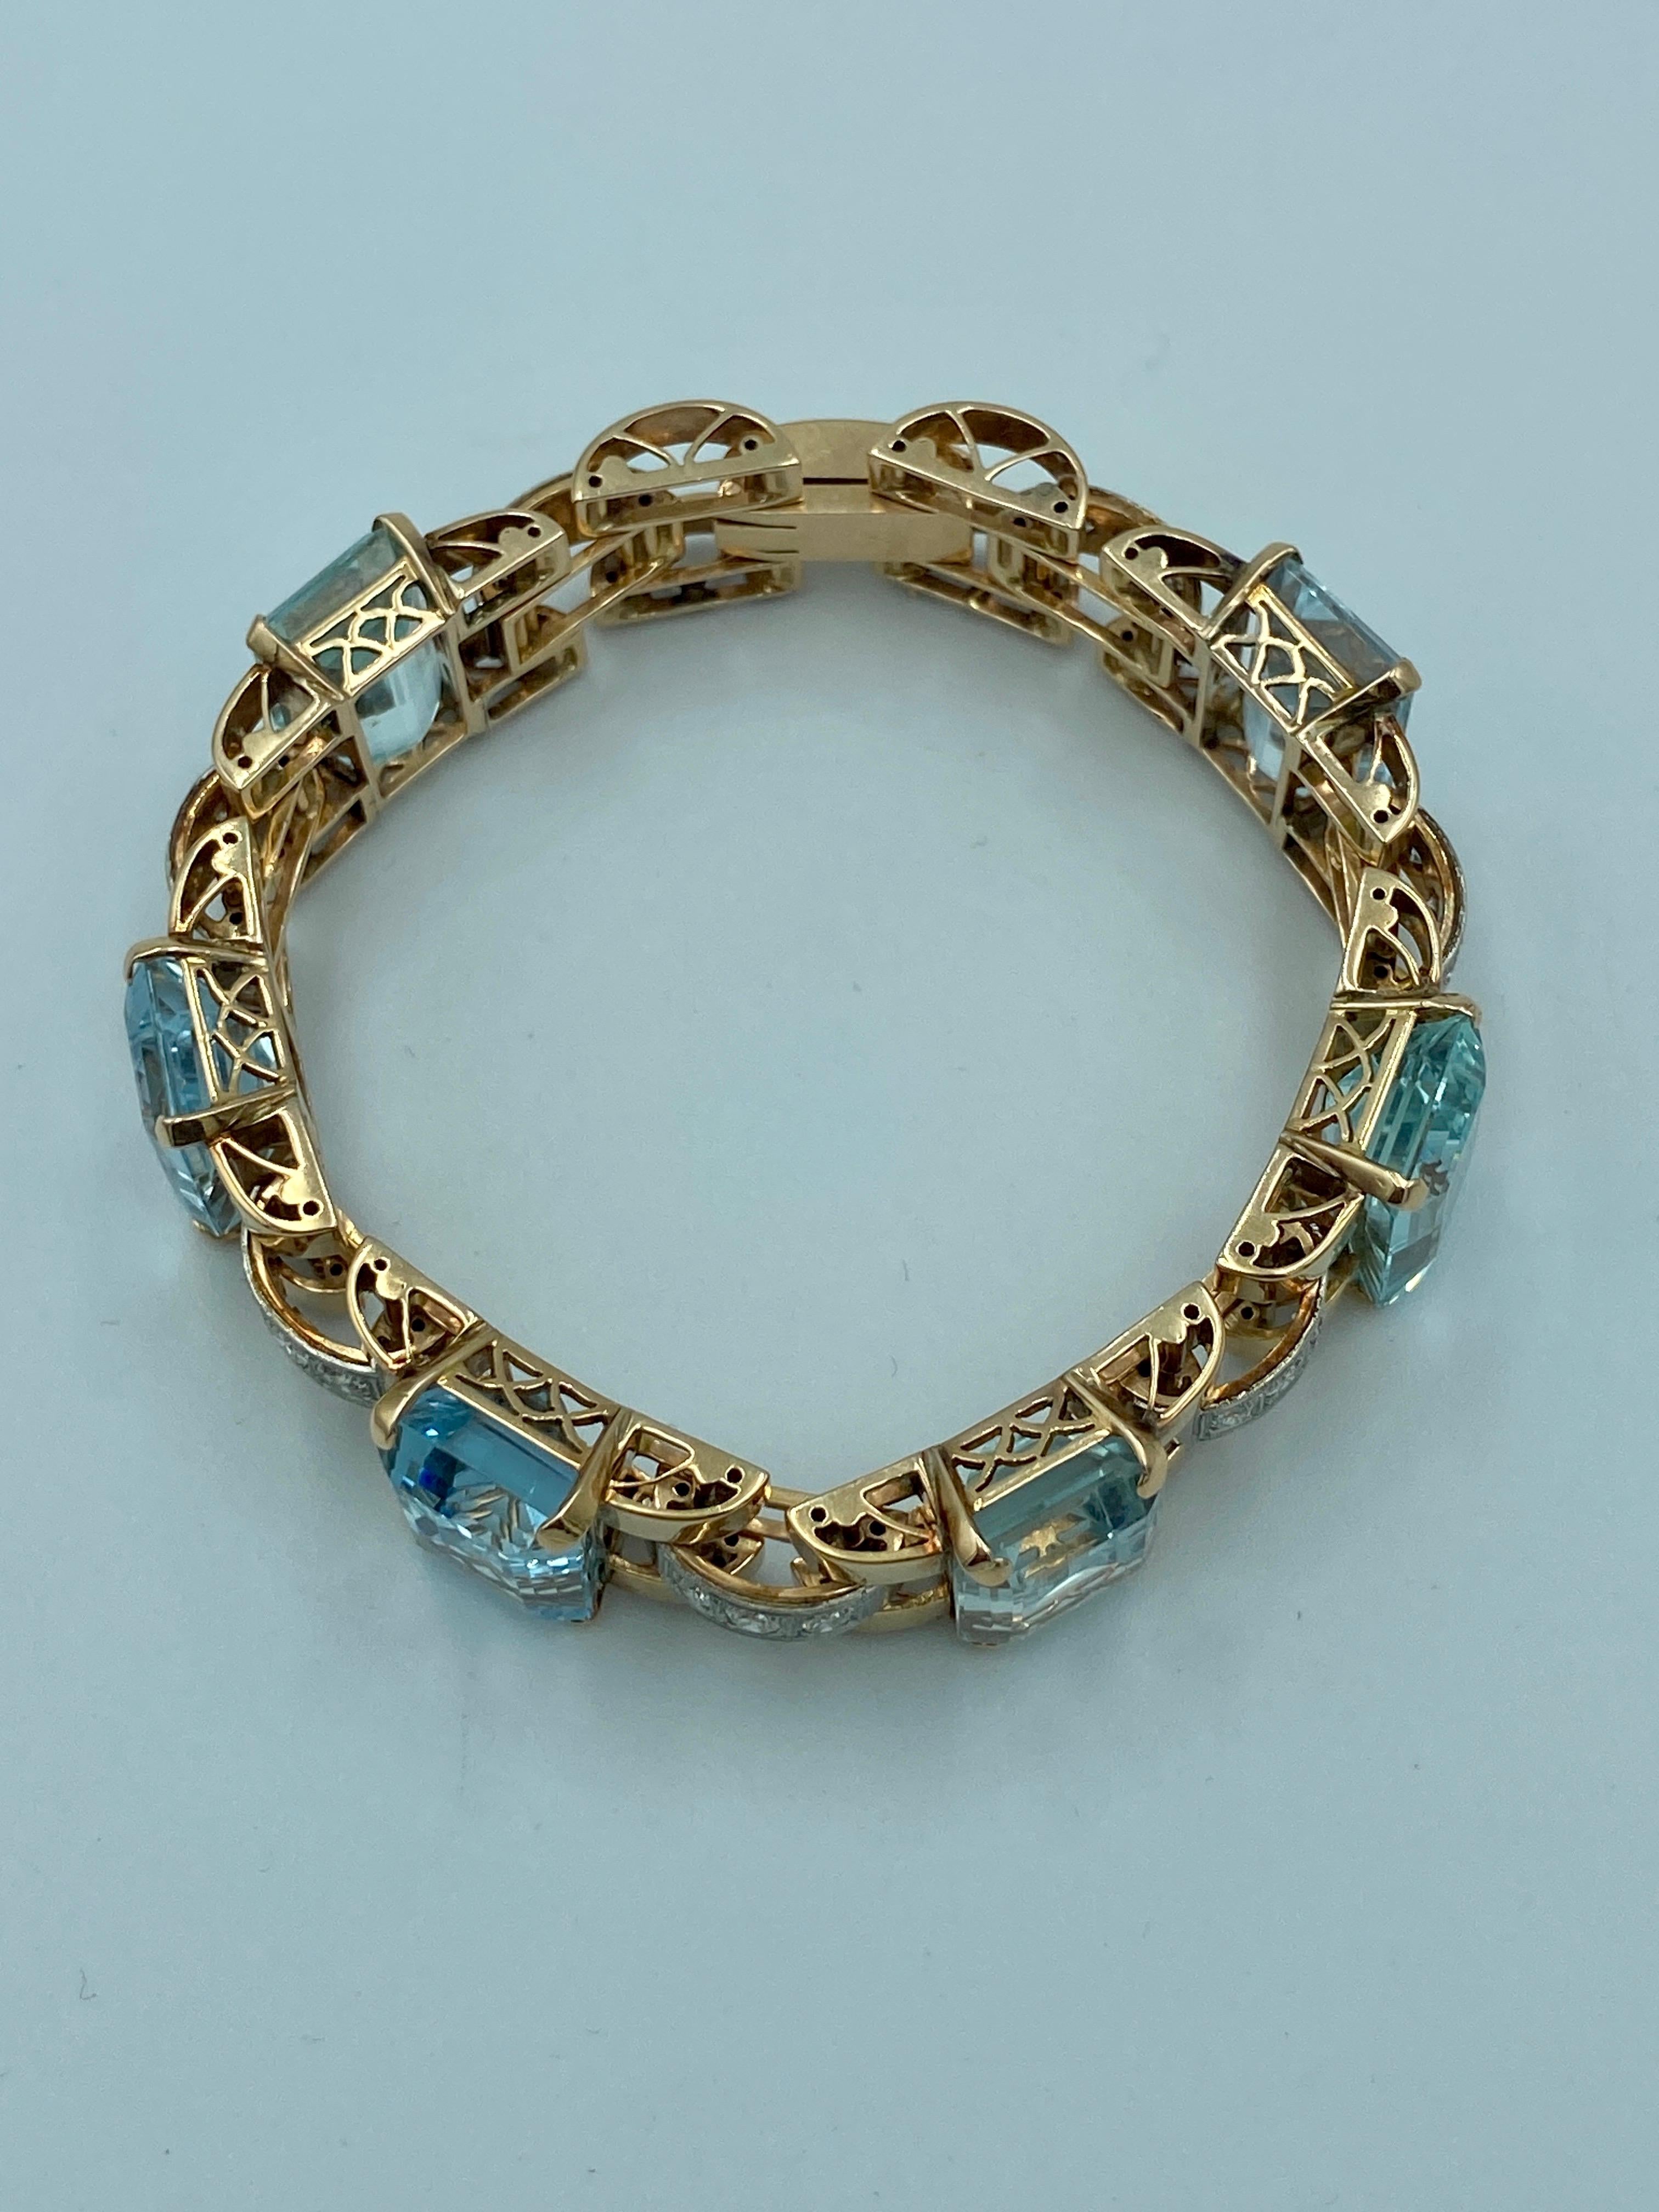 Emerald Cut 1950s French 18 carat gold aquamarine and diamond bracelet